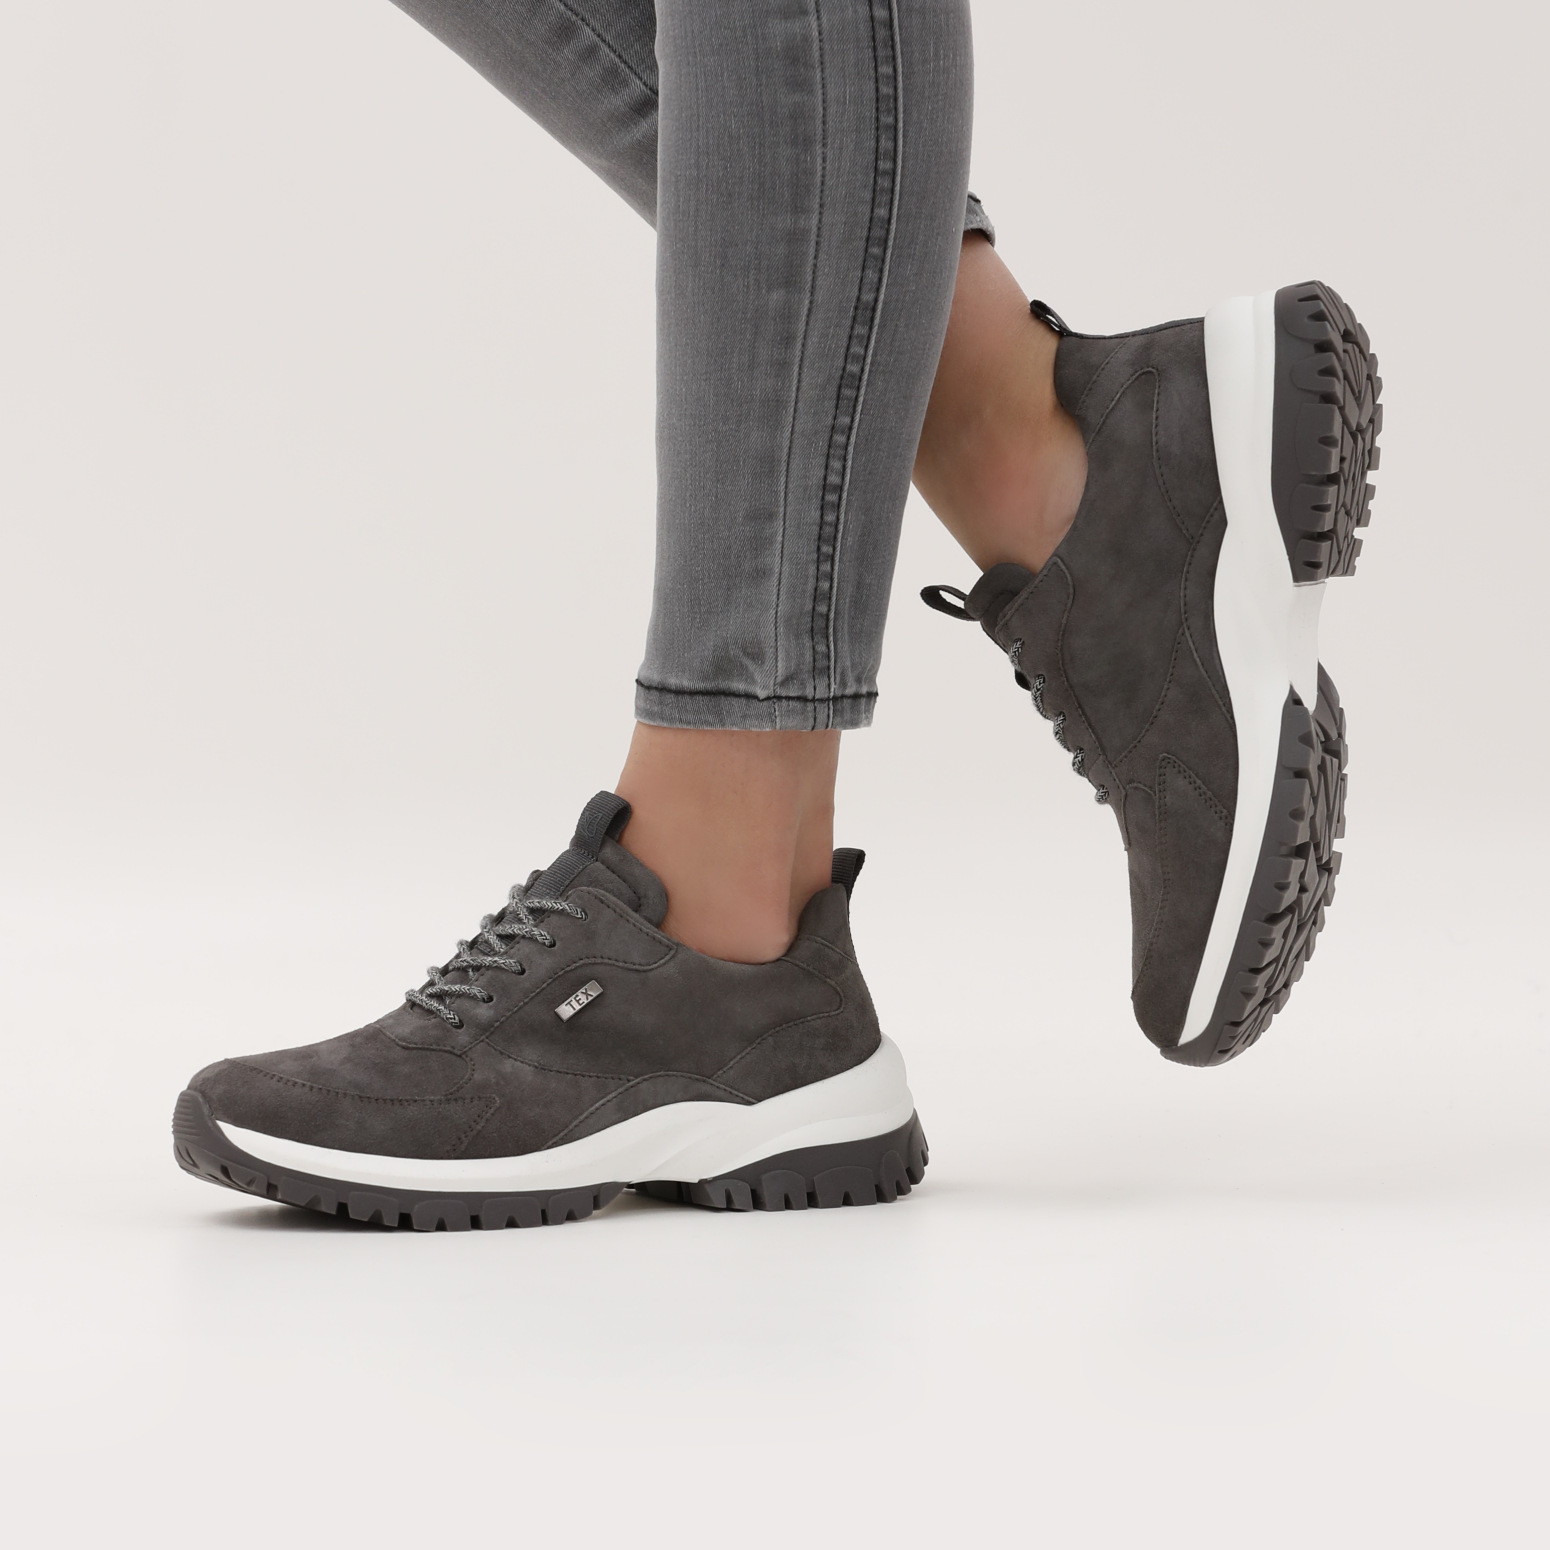 Caprice Sneaker - Grey Leather